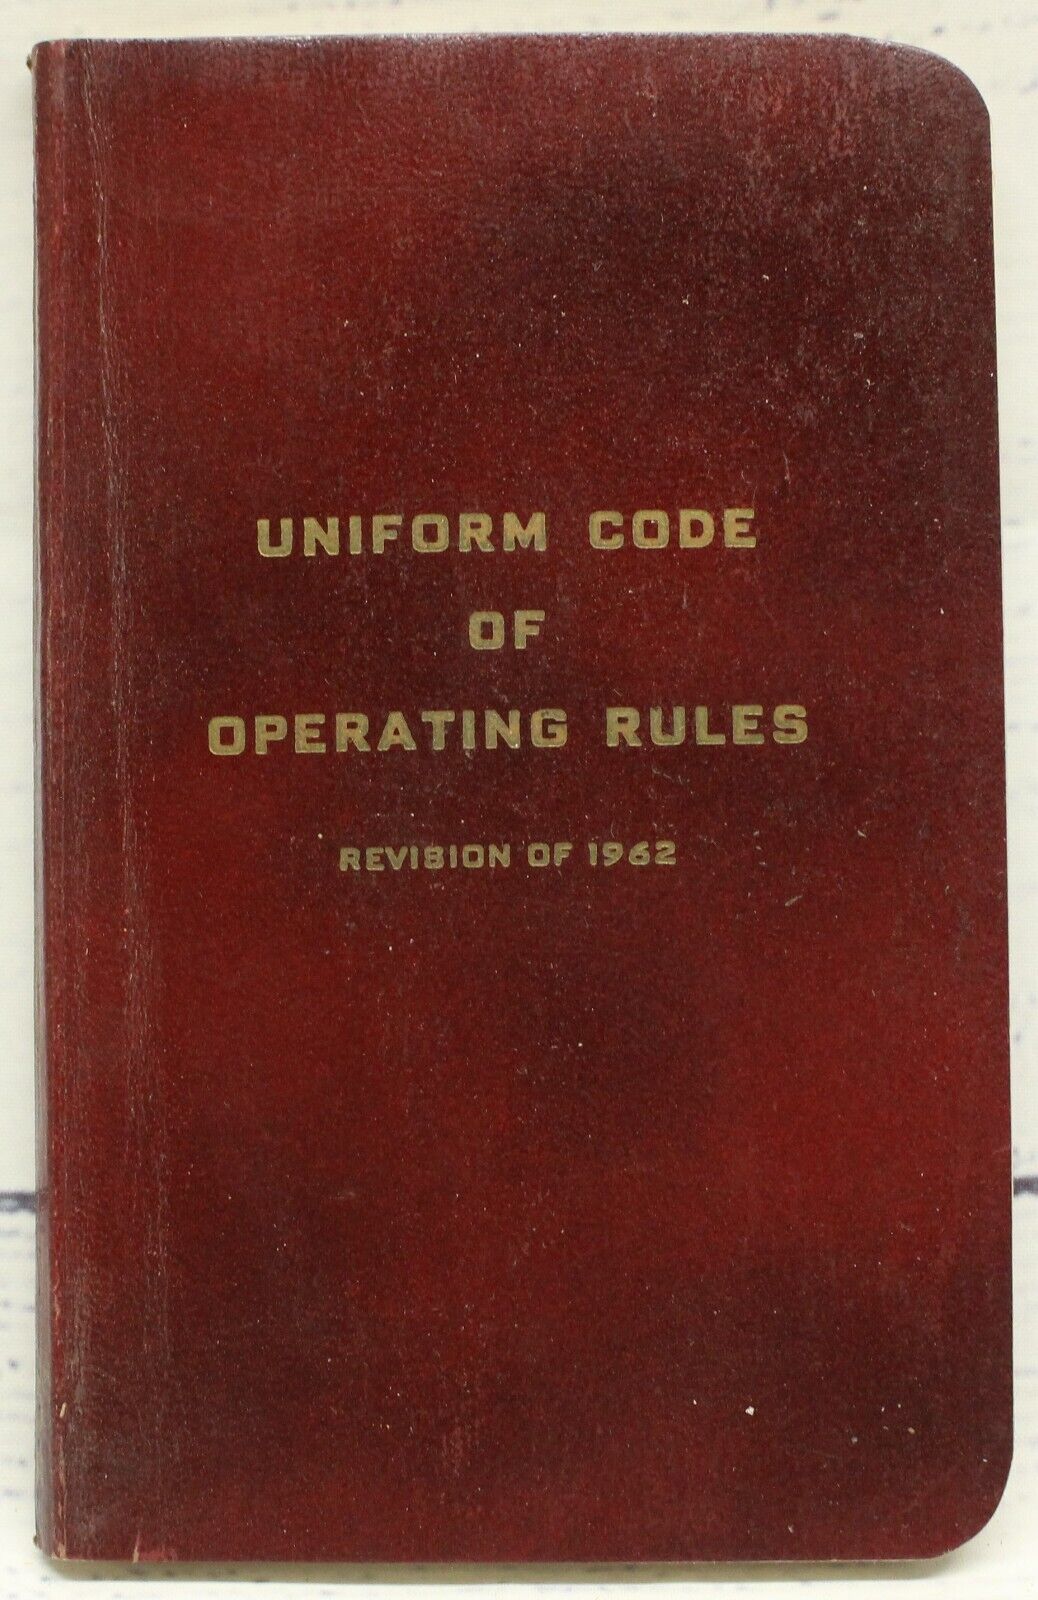 VINTAGE 1962 UNIFORM CODE of OPERATING RULES RAILROAD RULE BOOK